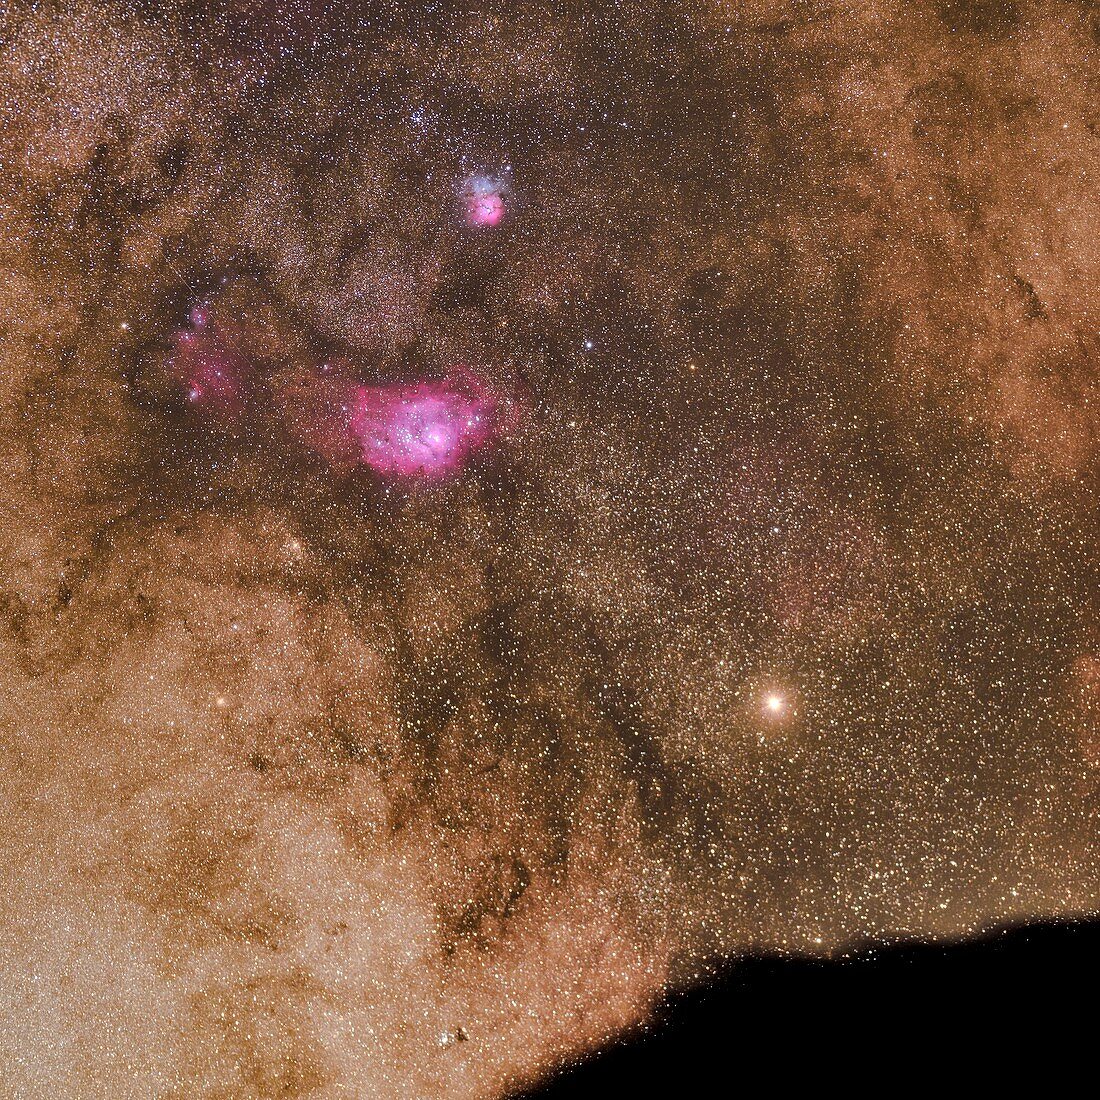 Mars and Lagoon Nebula in the Milky Way